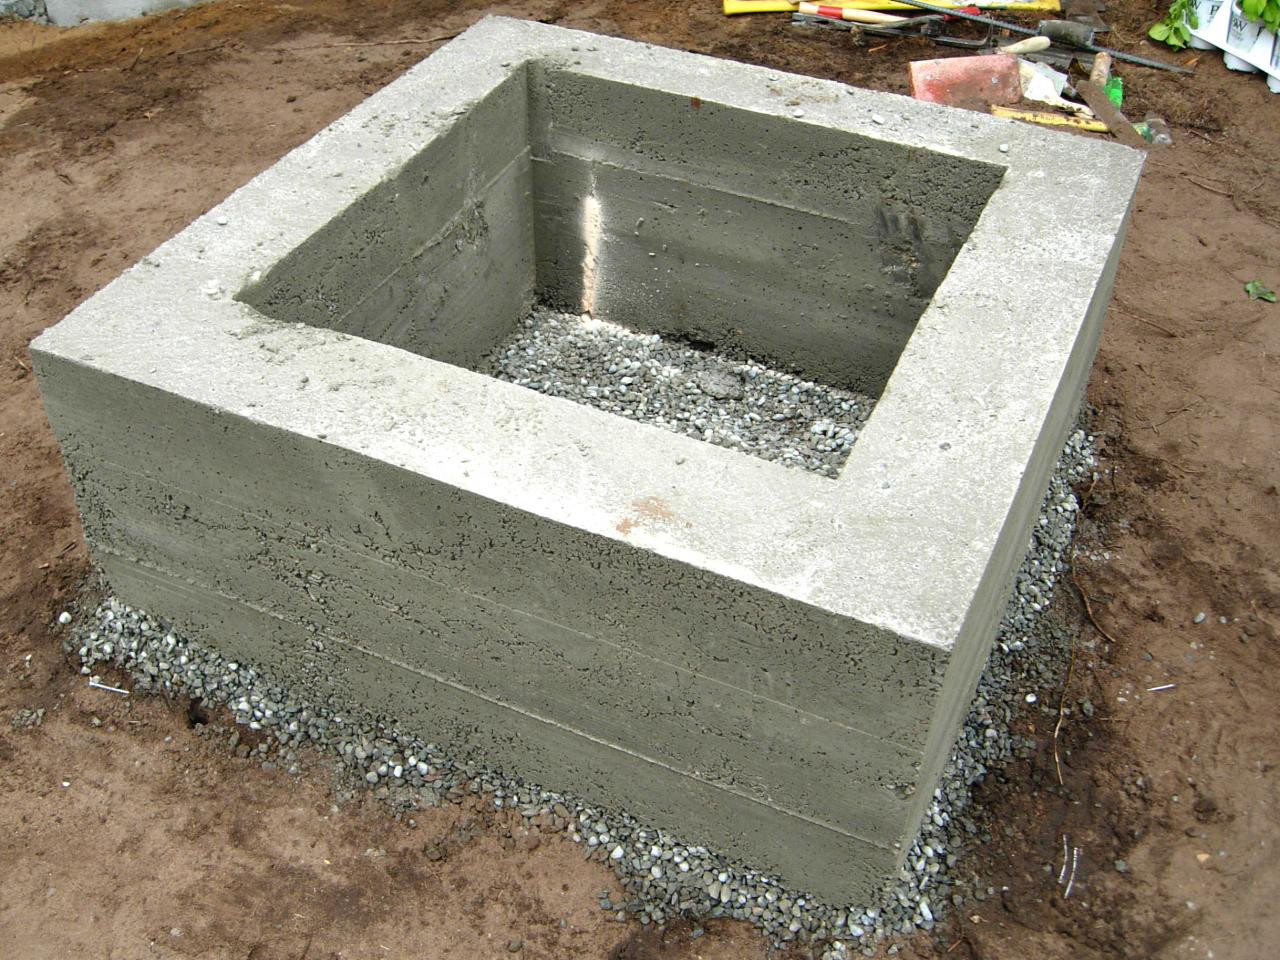 Best ideas about DIY Concrete Fire Pit
. Save or Pin Diy concrete fire pit A smart Idea for a plete Now.